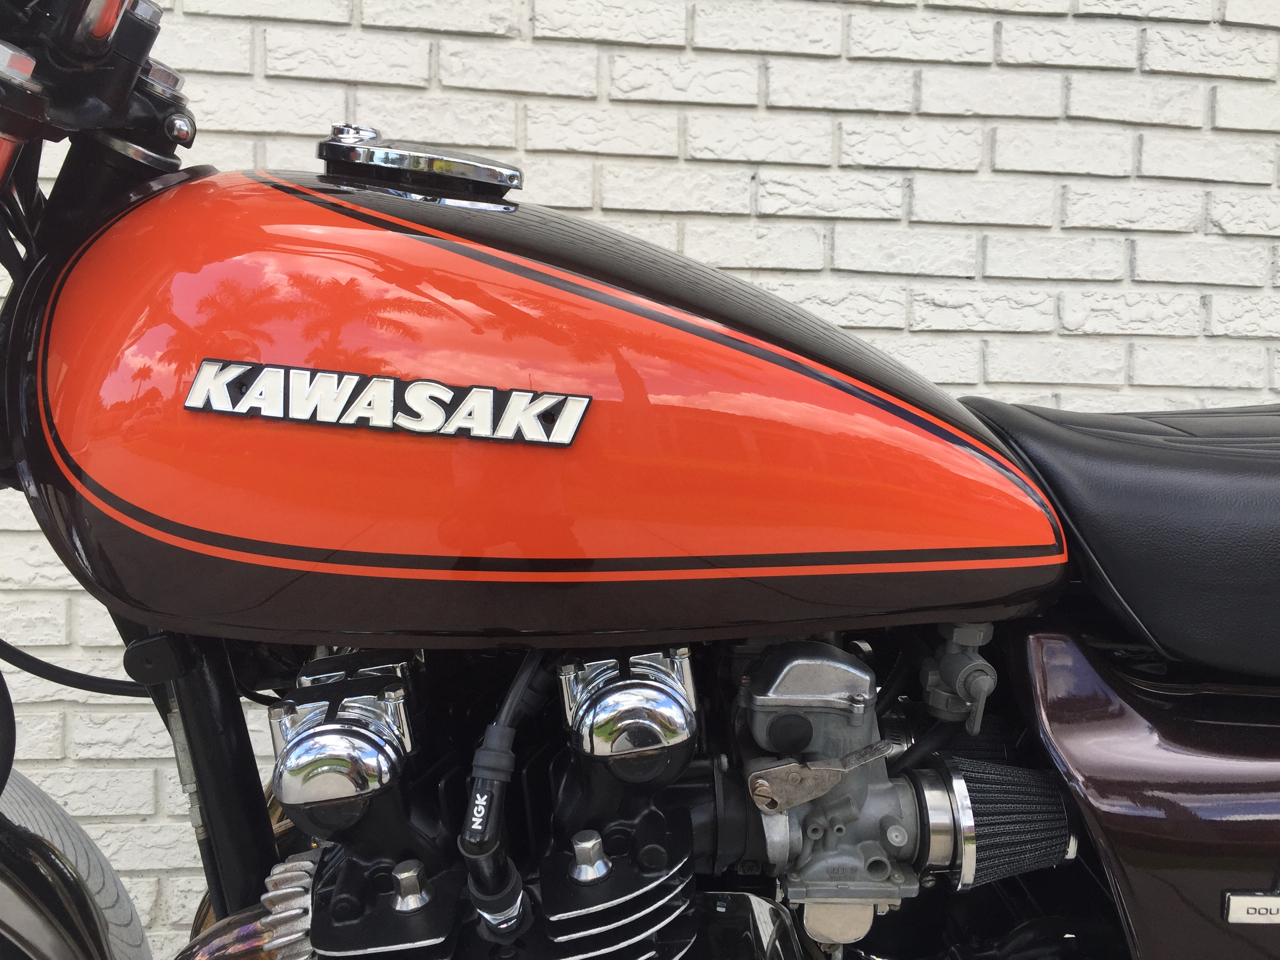 Kawasaki KZ900 Double Overhead camshaft 4